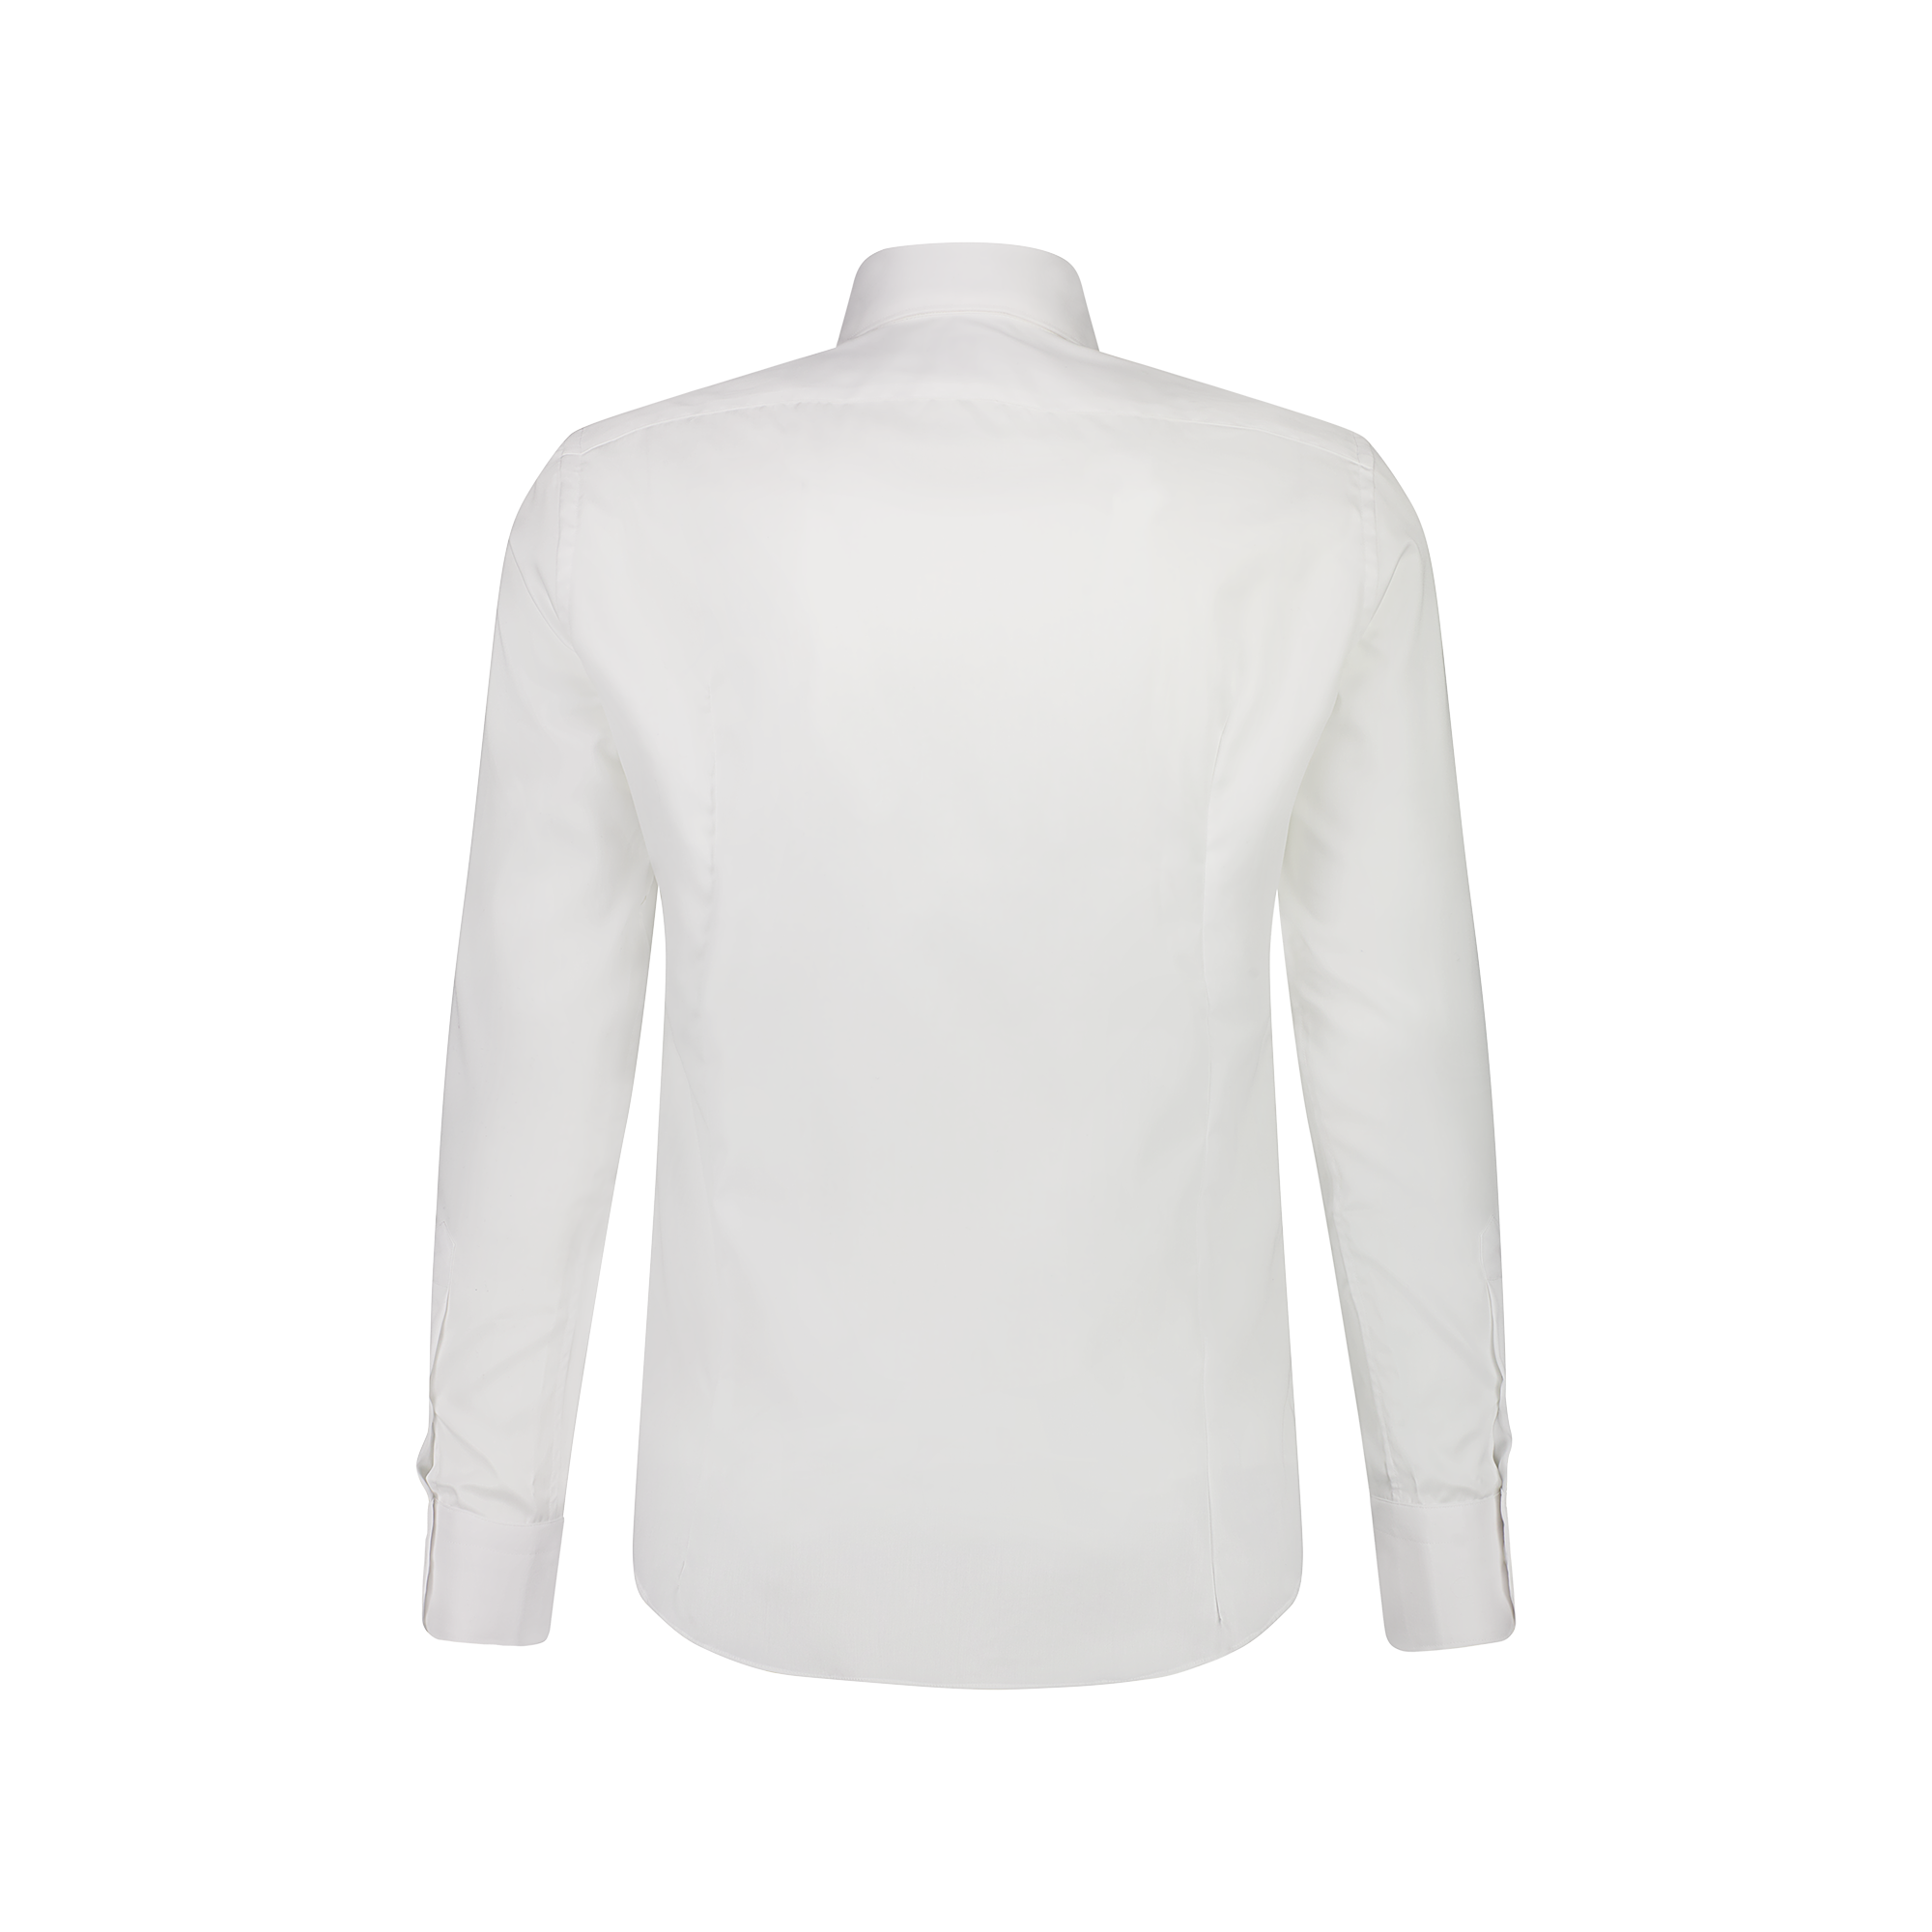 CORDONE Elegance Max Shirt in WINTER WHITE